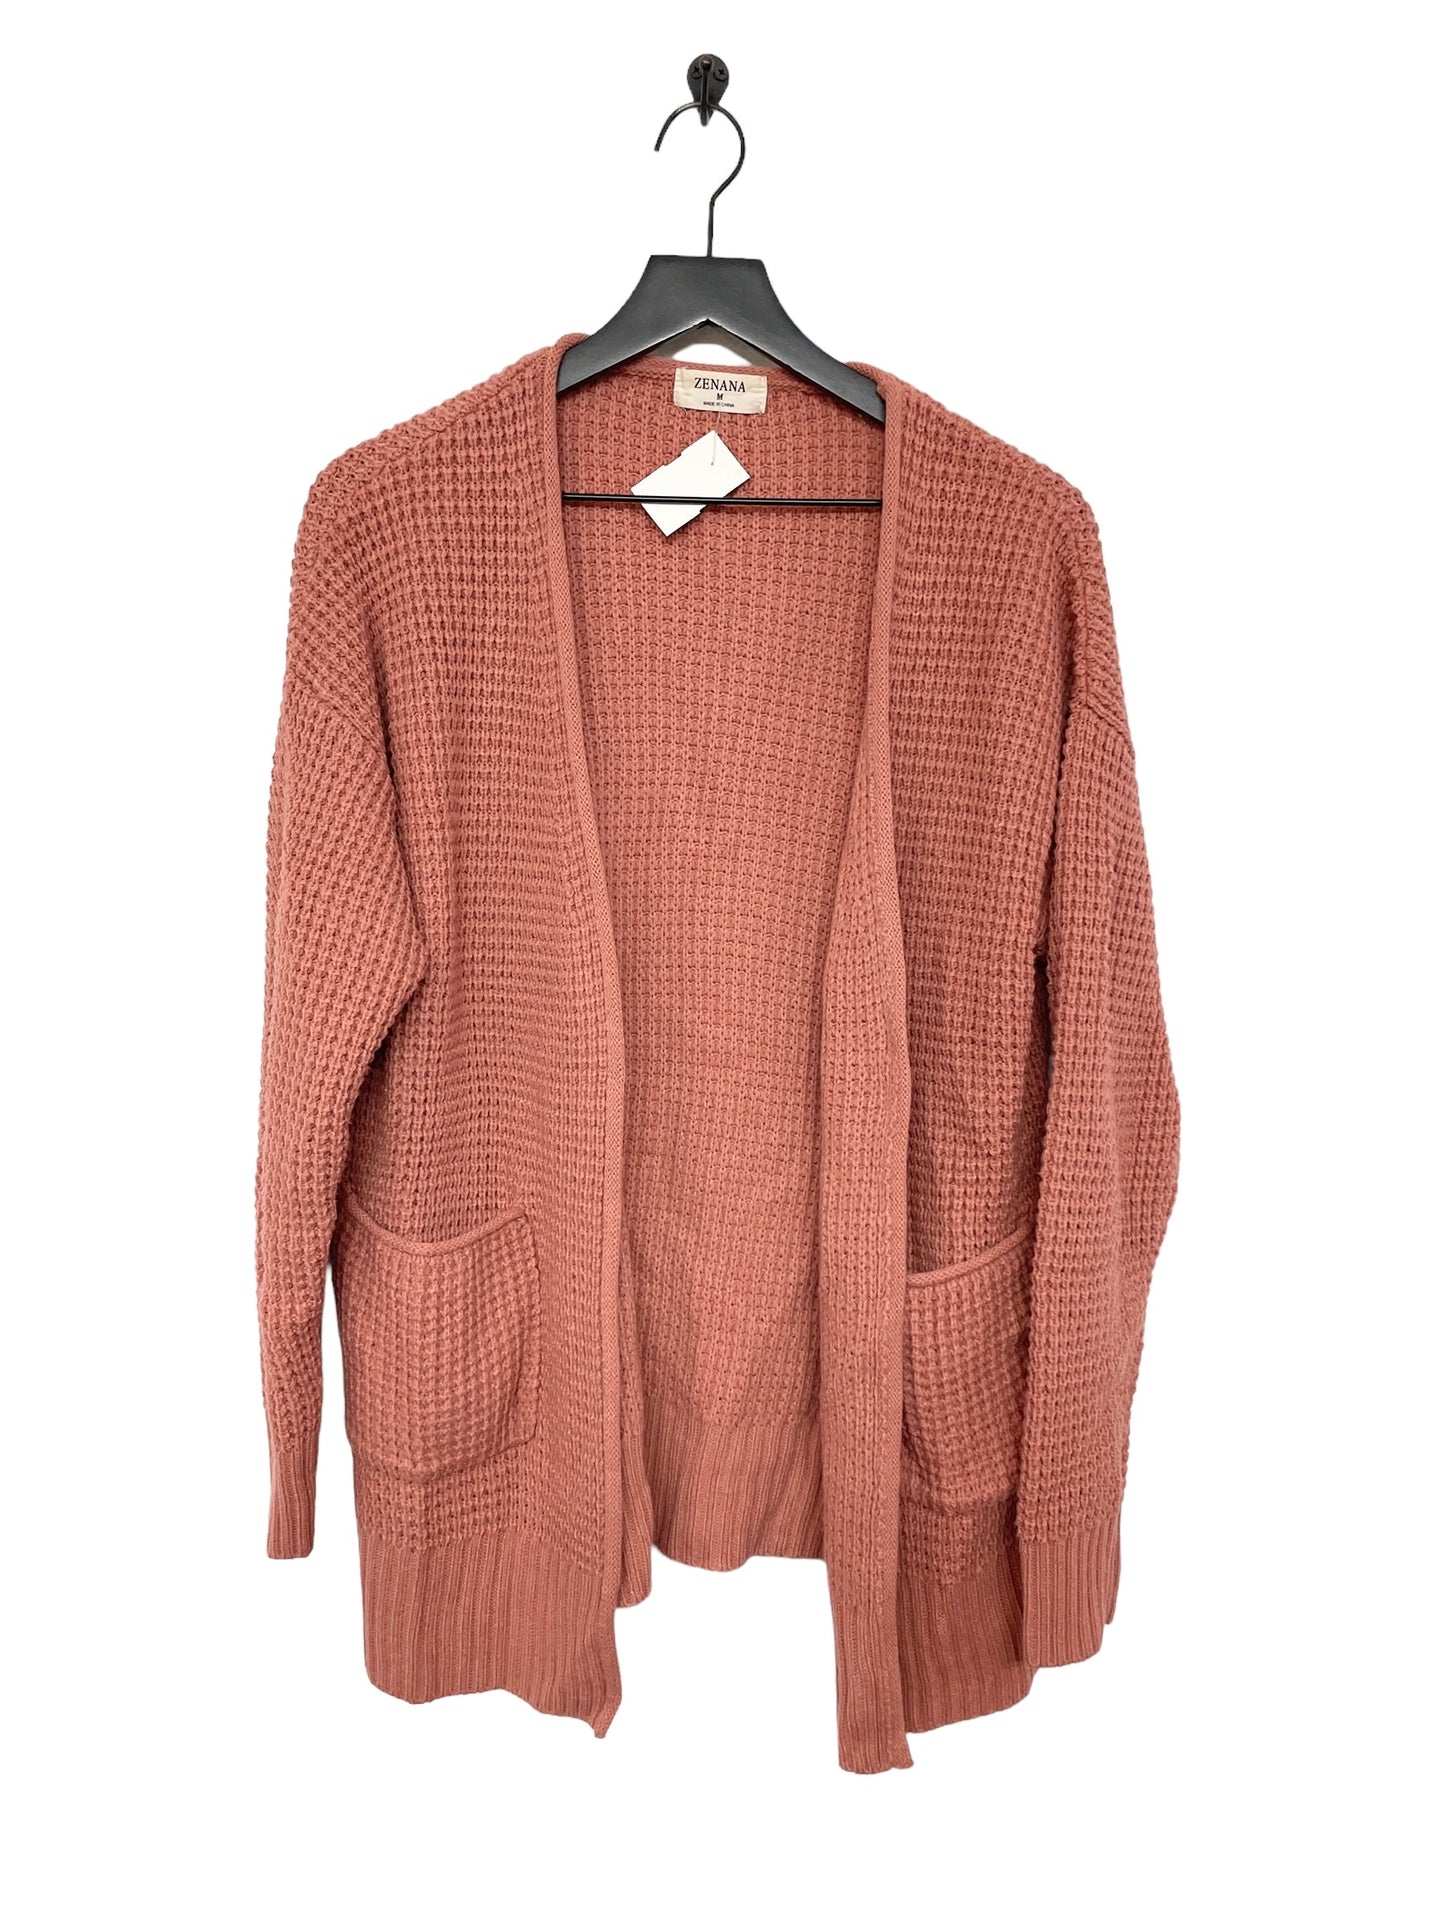 Rose Sweater Cardigan Zenana Outfitters, Size M